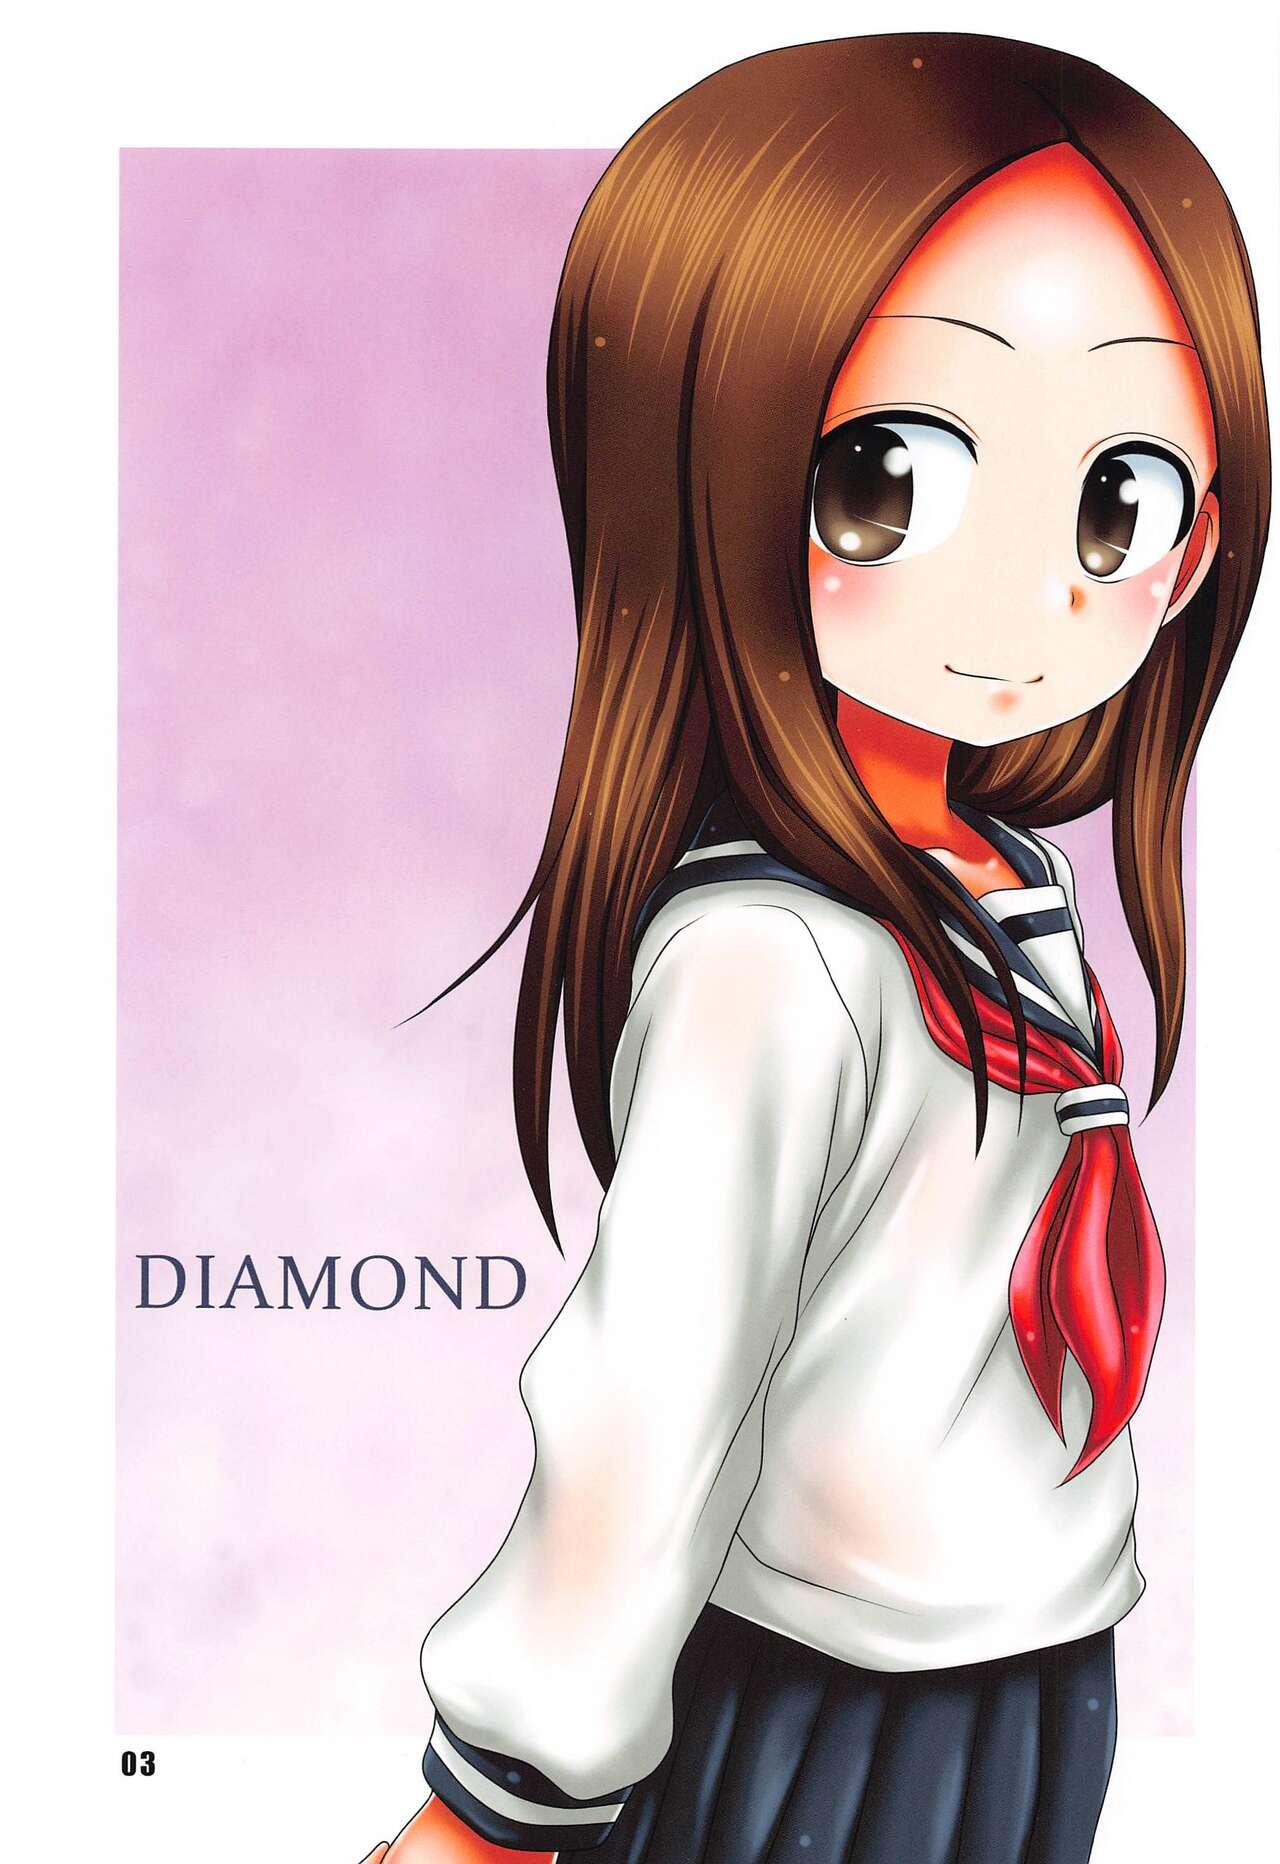 DIAMOND color edition 1